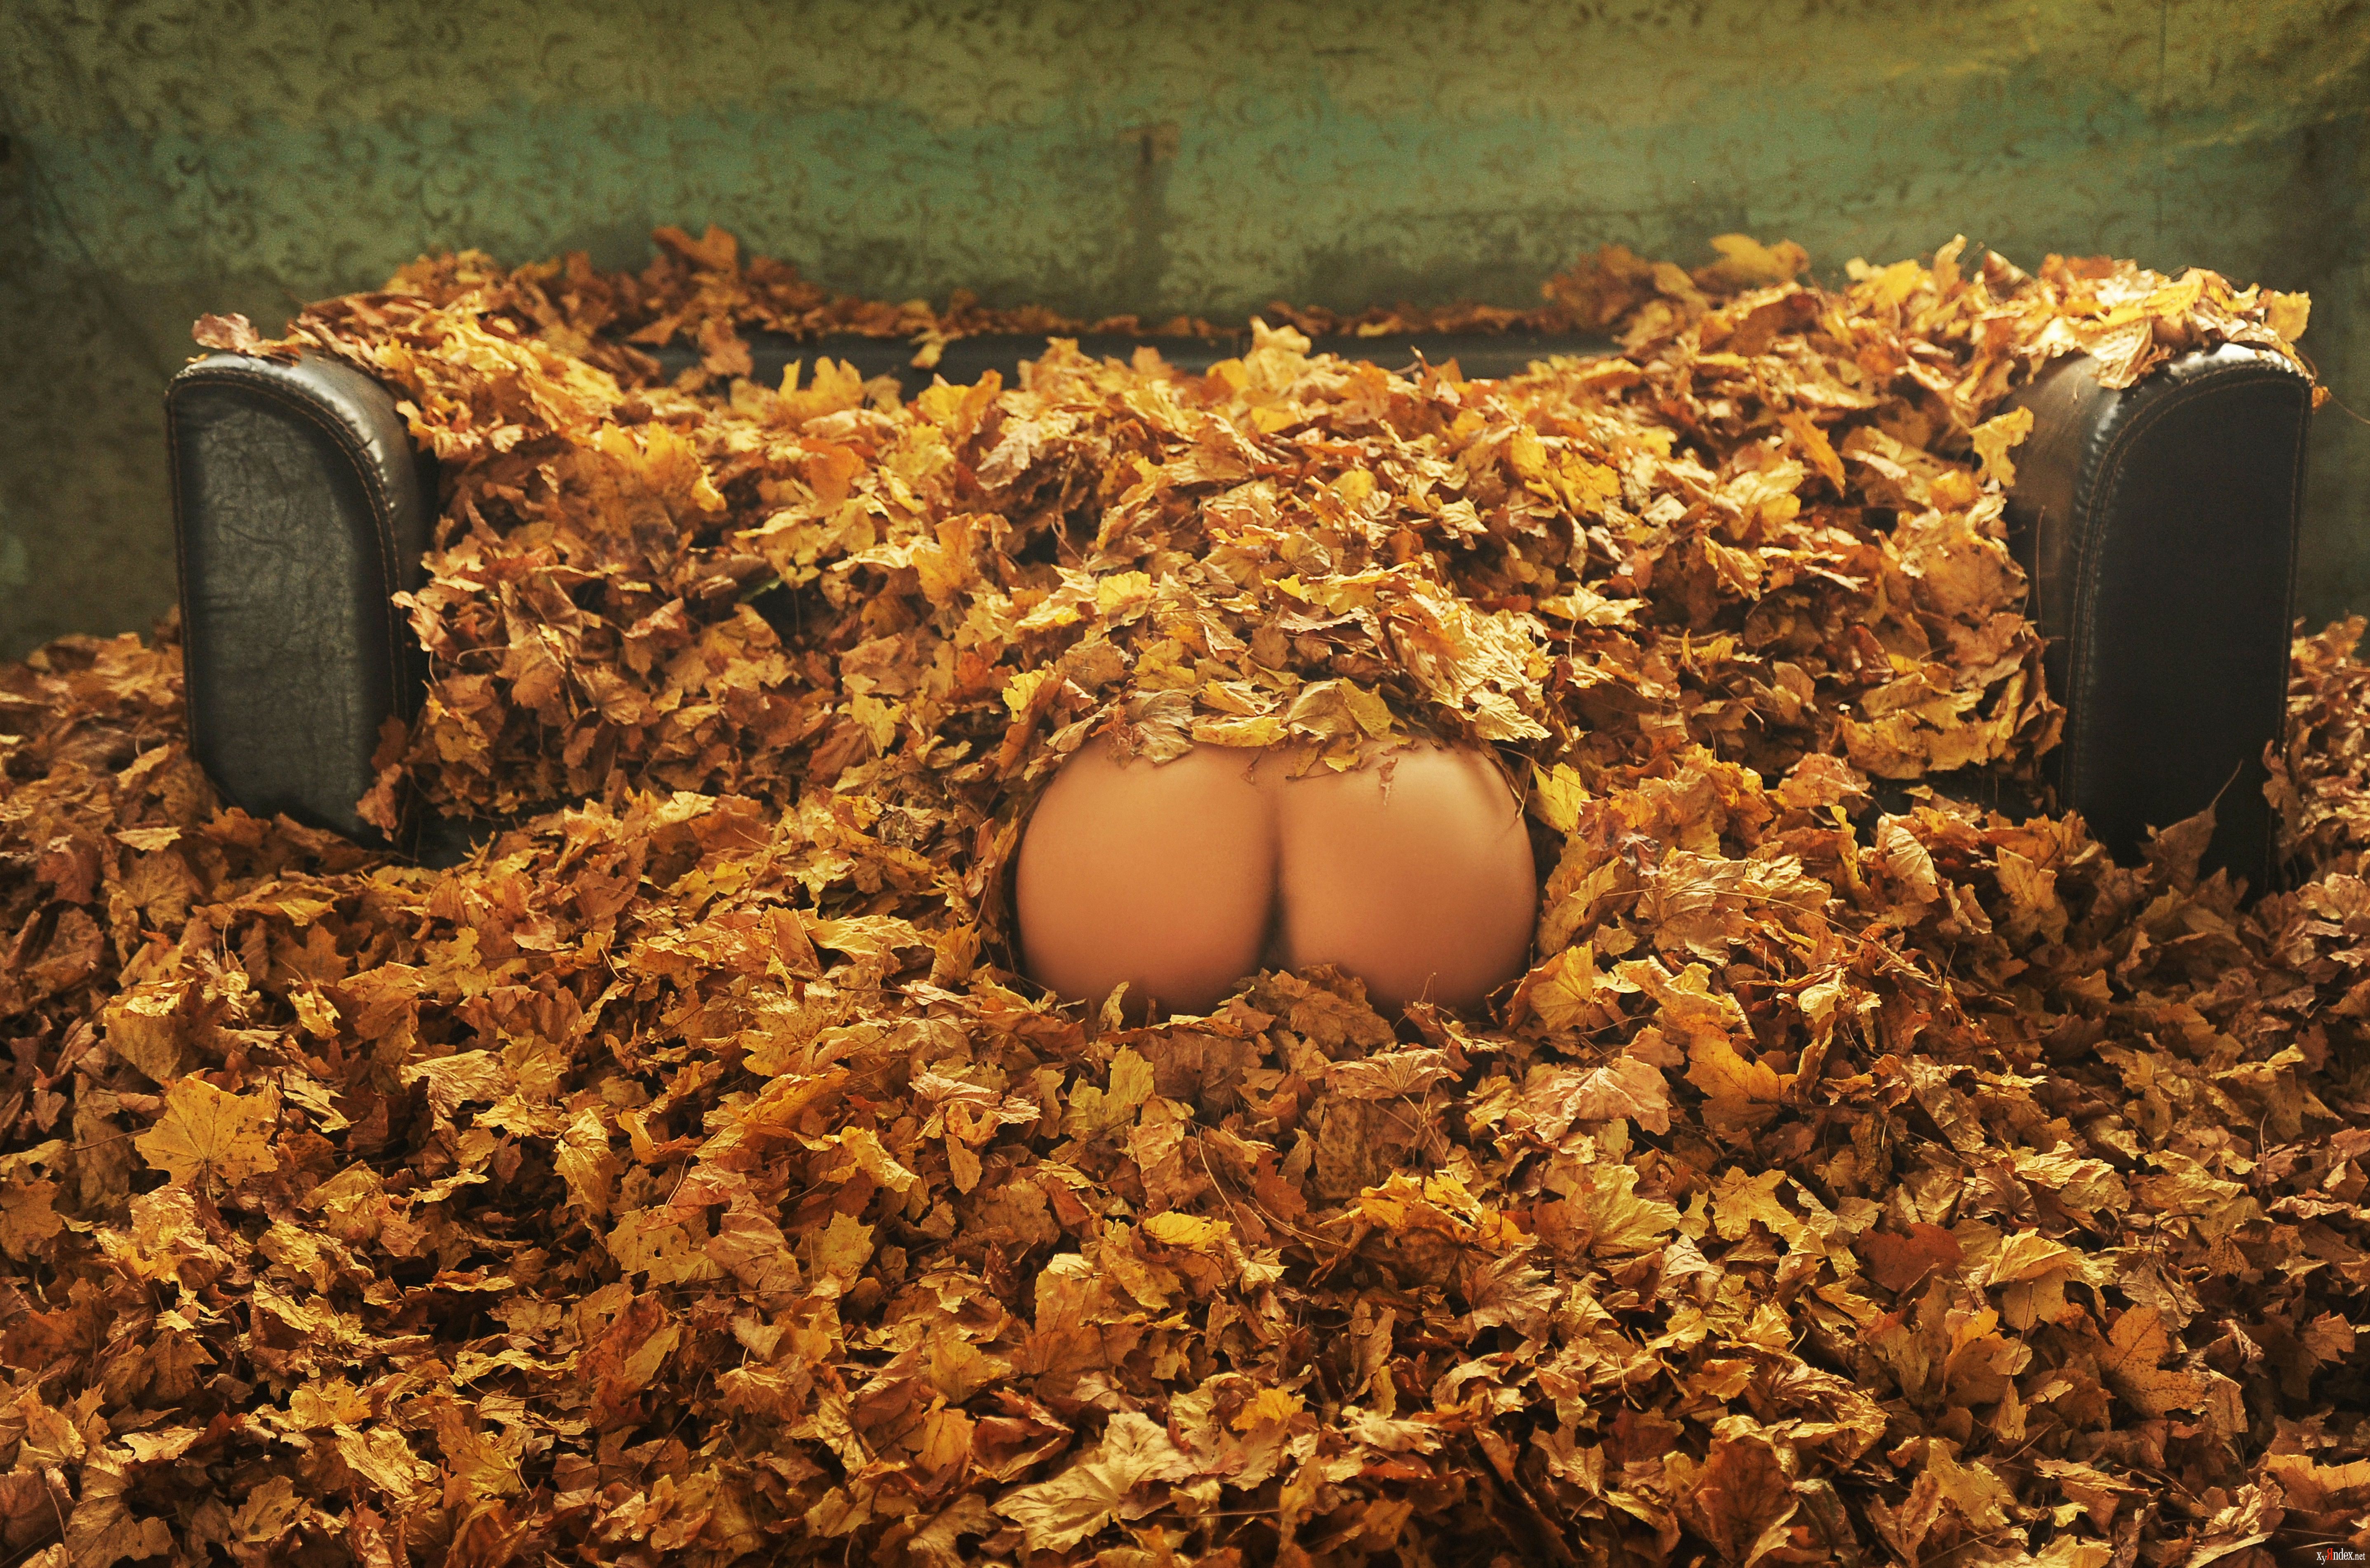 Joy Lamore "Autumn Immersion" (64 фото) .